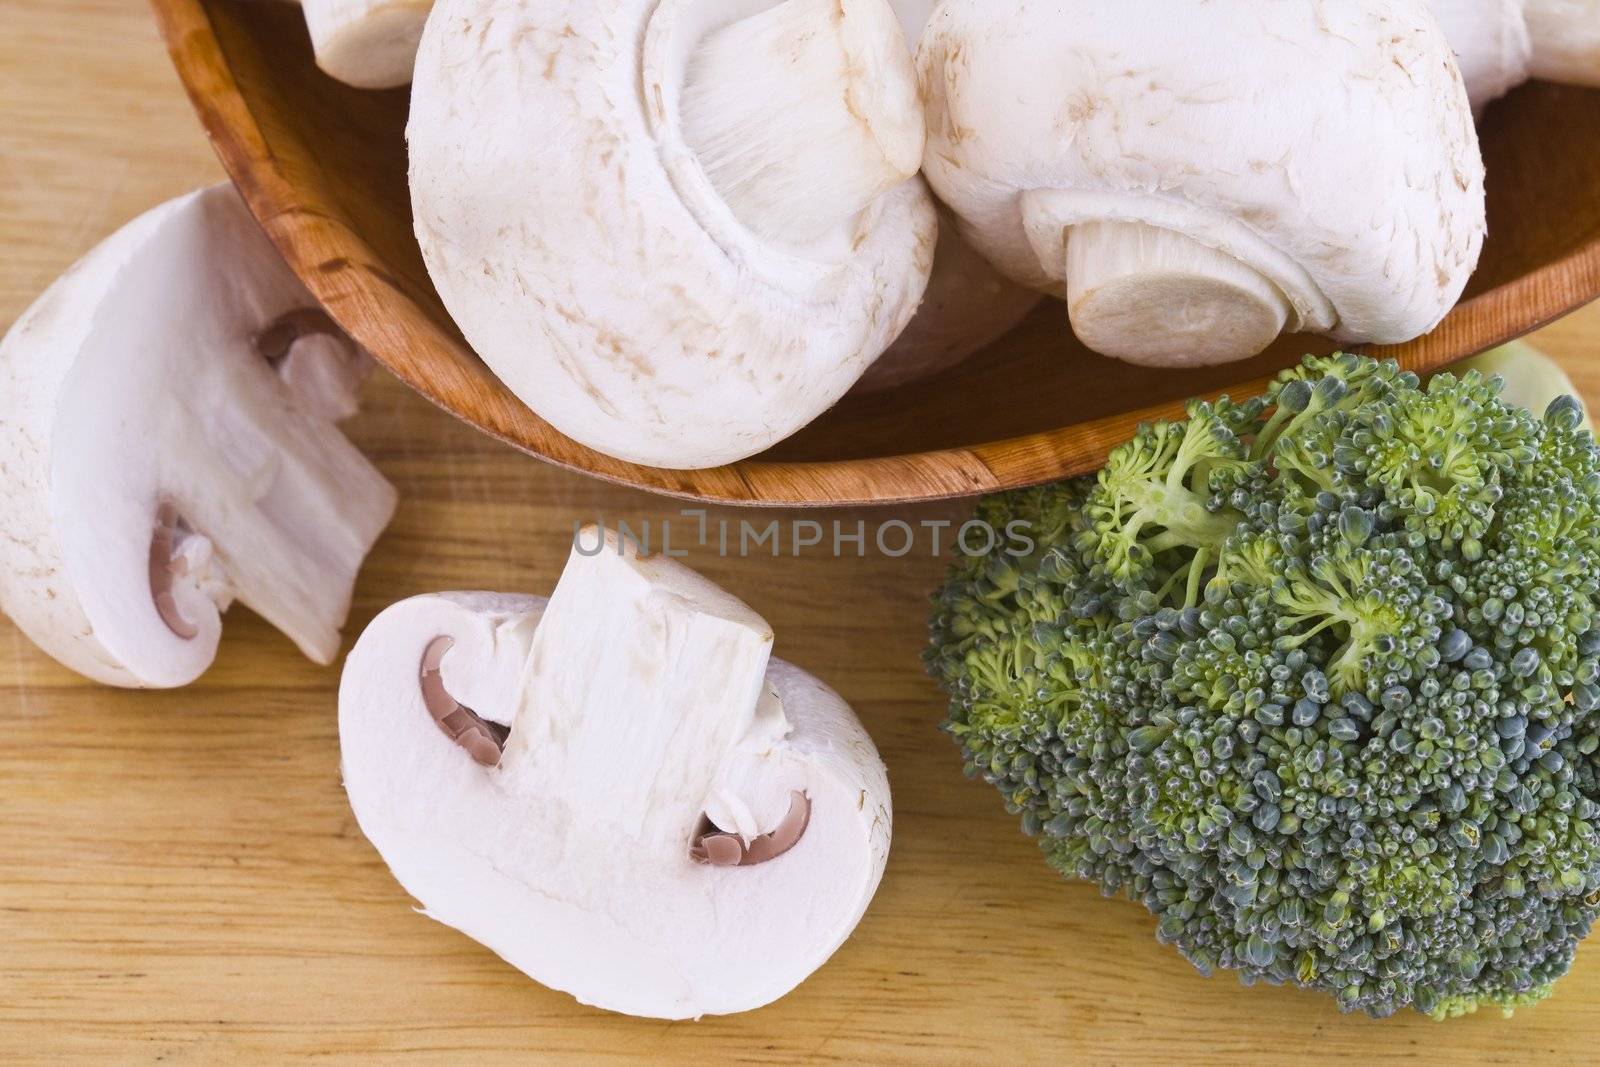 Mushrooms and broccoli by Gbuglok